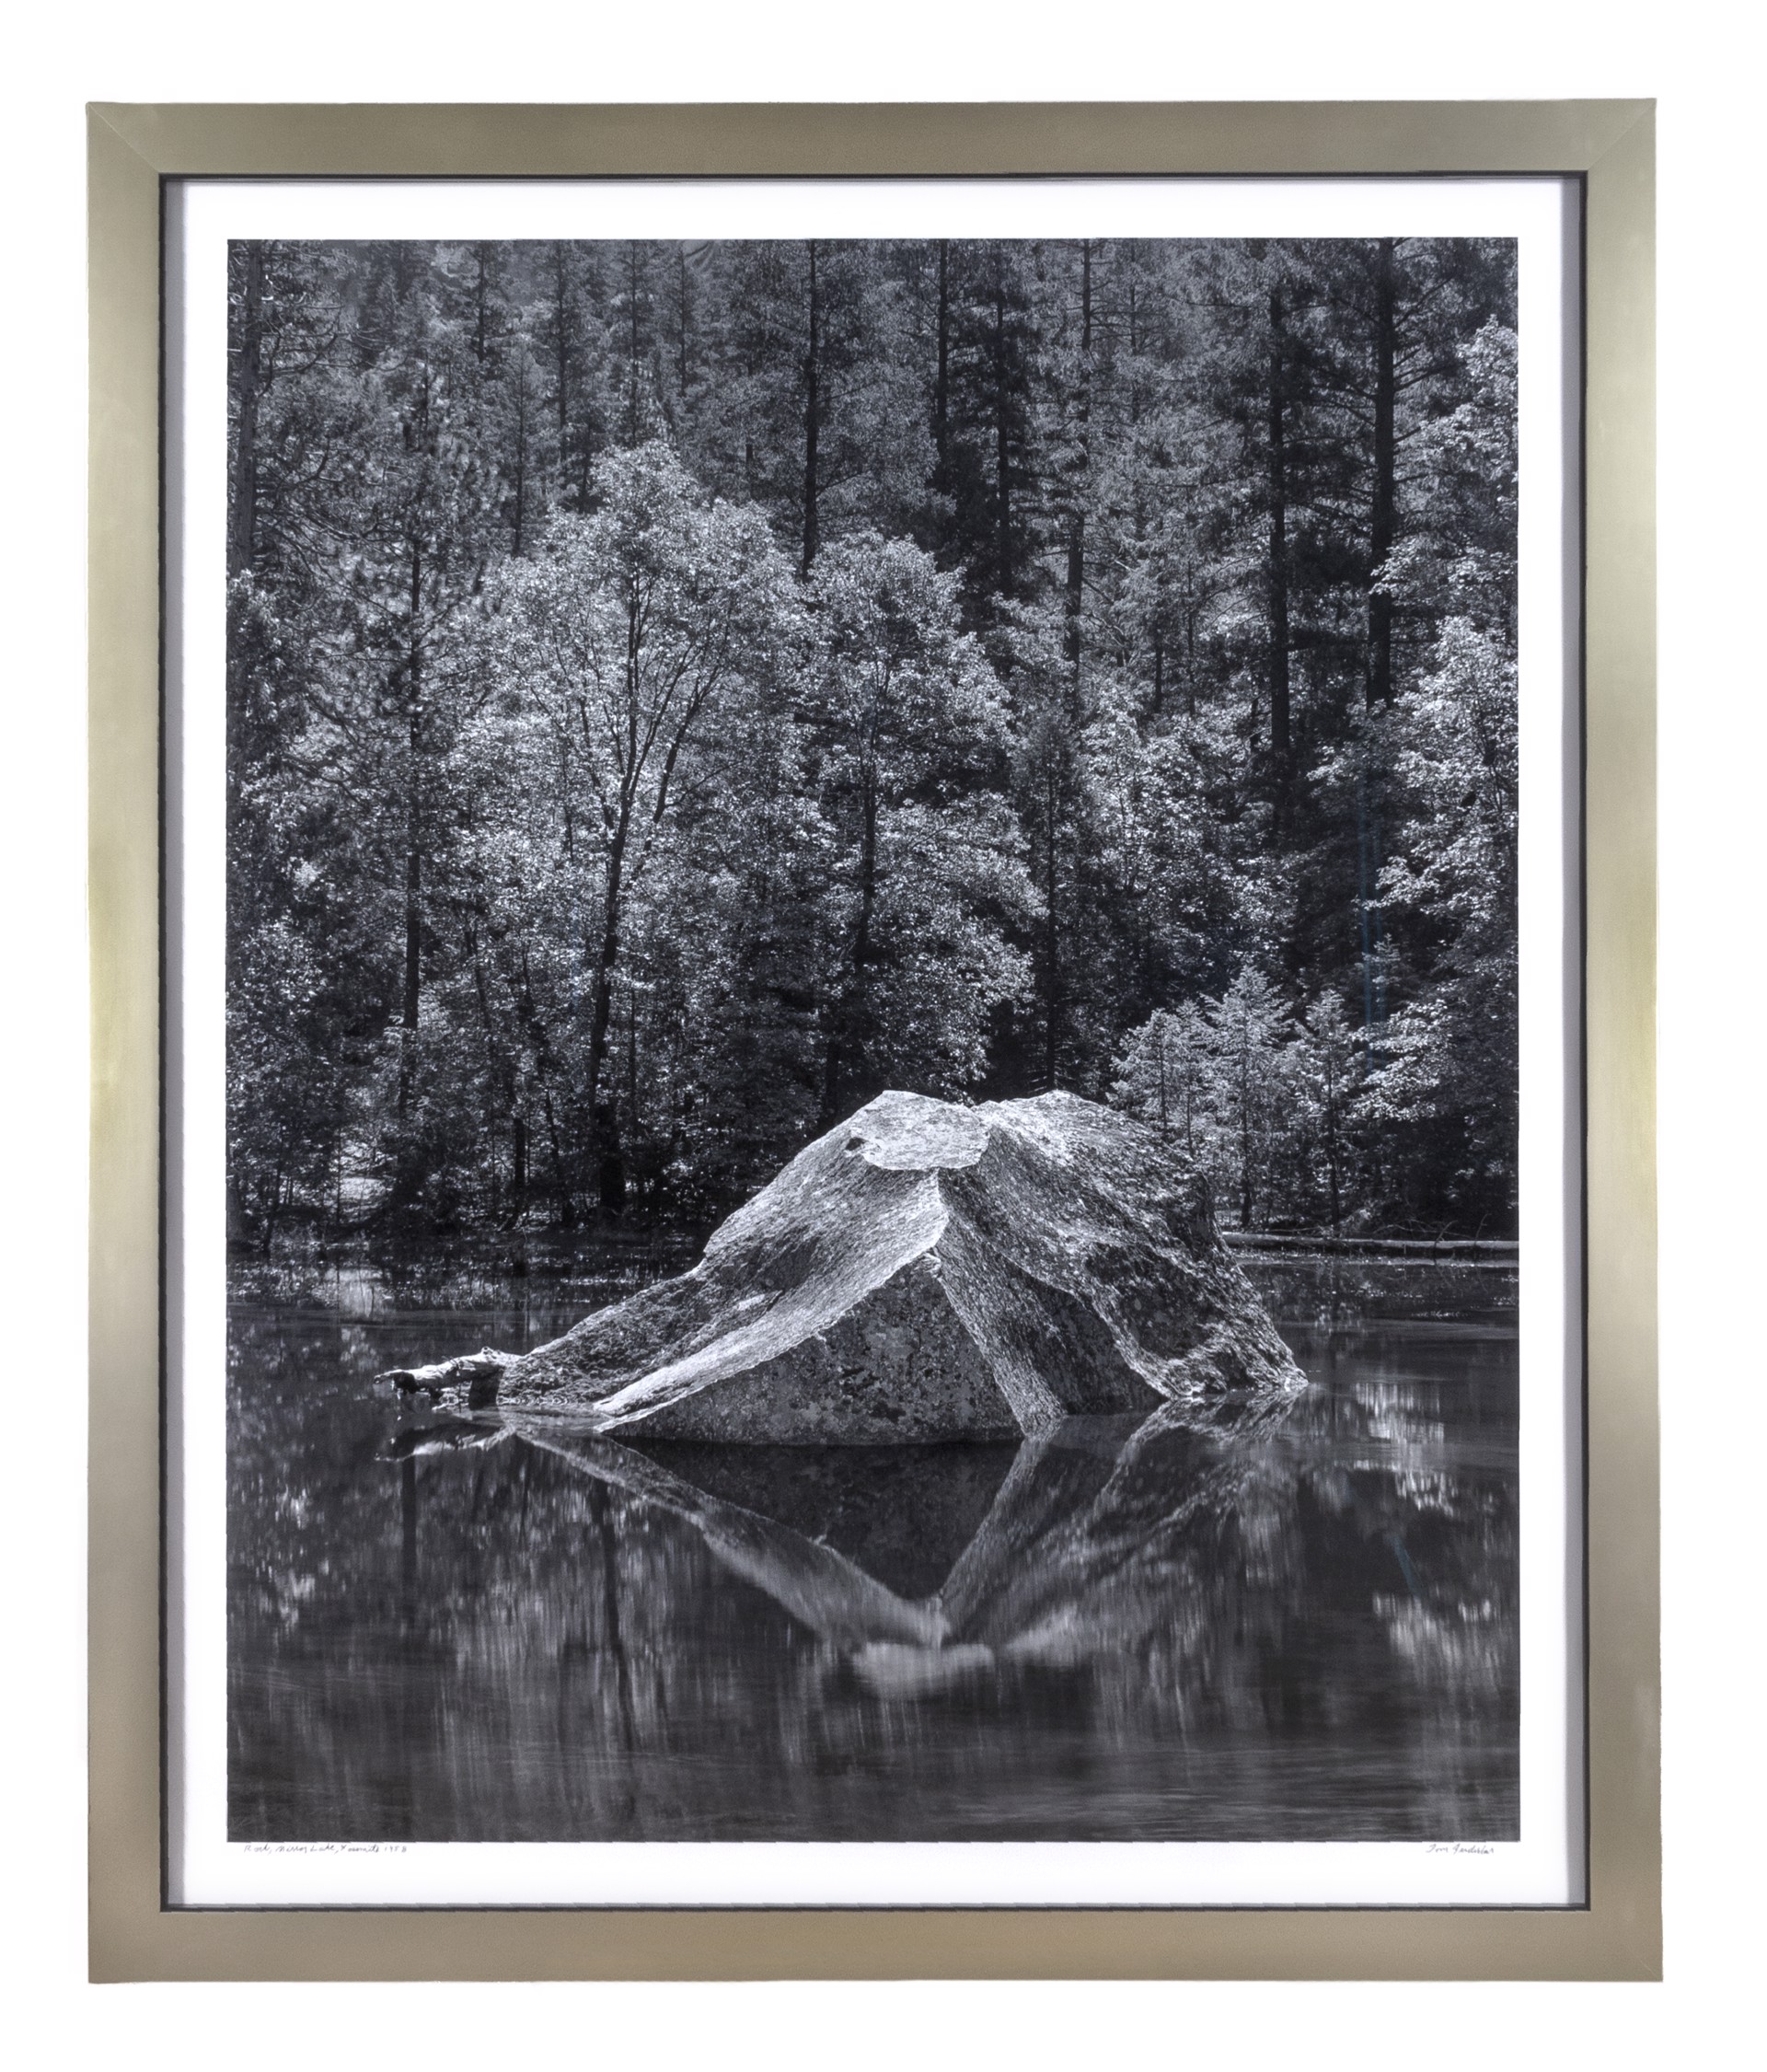 Rock, Mirror Lake, CA (Yosemite) by Thomas Ferderbar